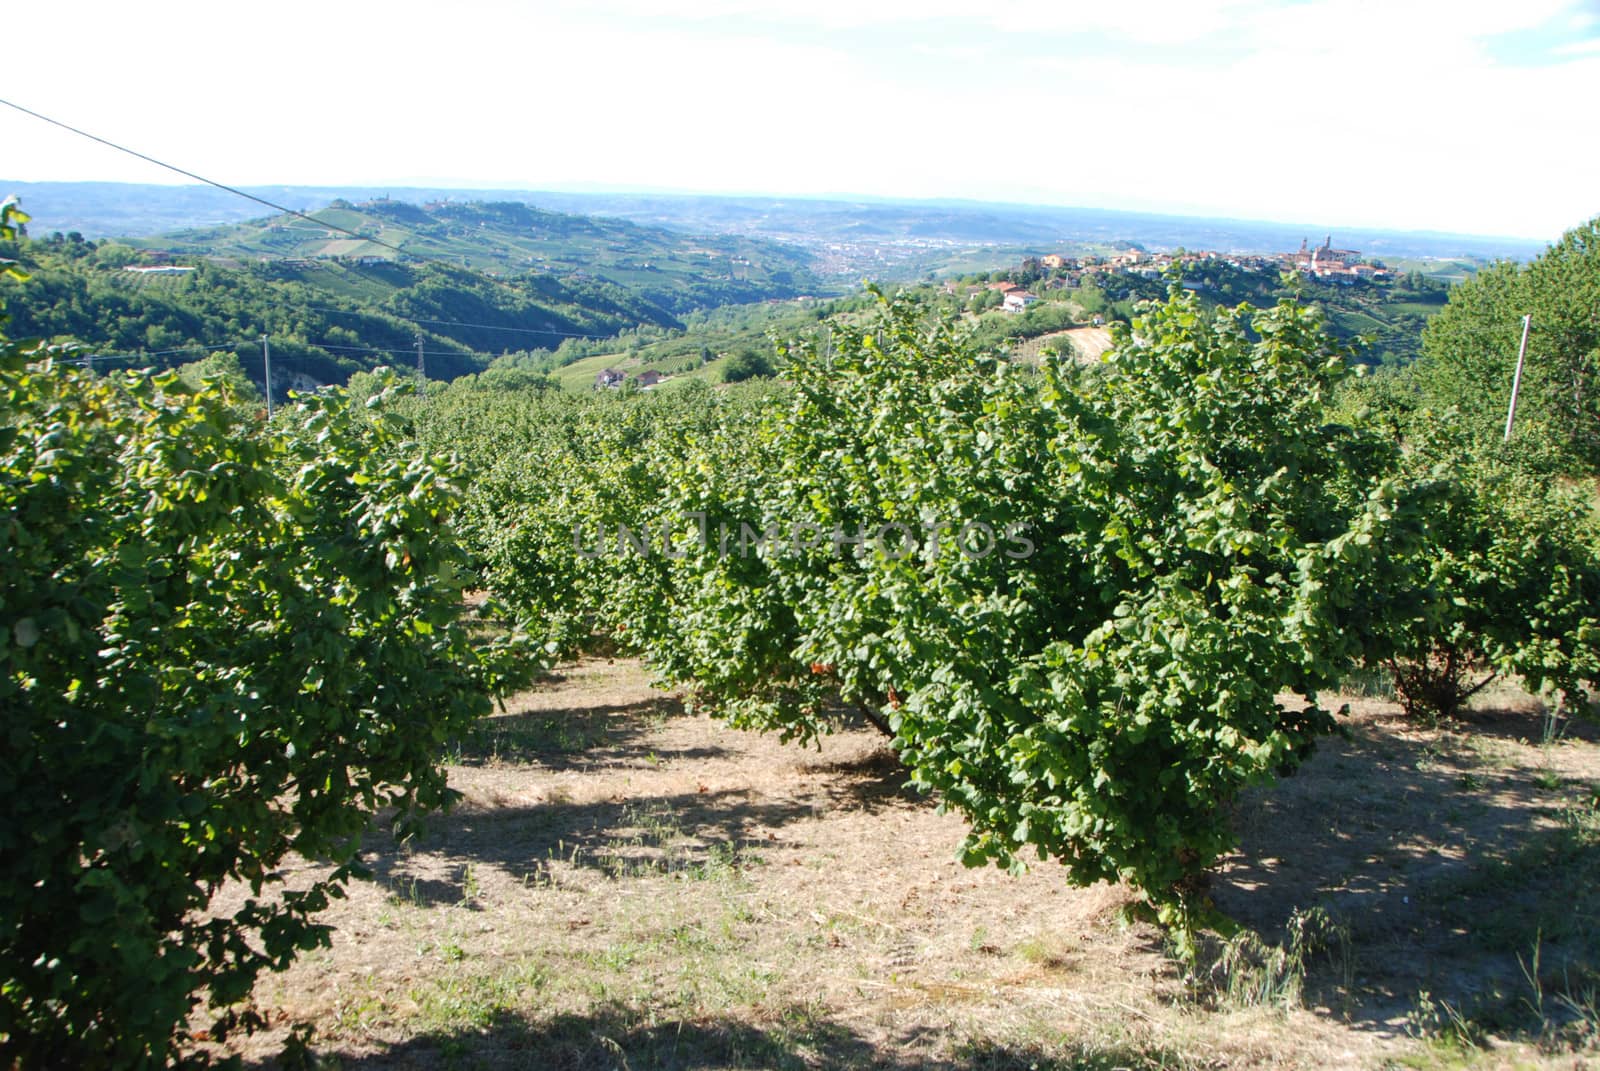 Field cultivated with Hazelnuts in Cravanzana, Piemonte - Italy